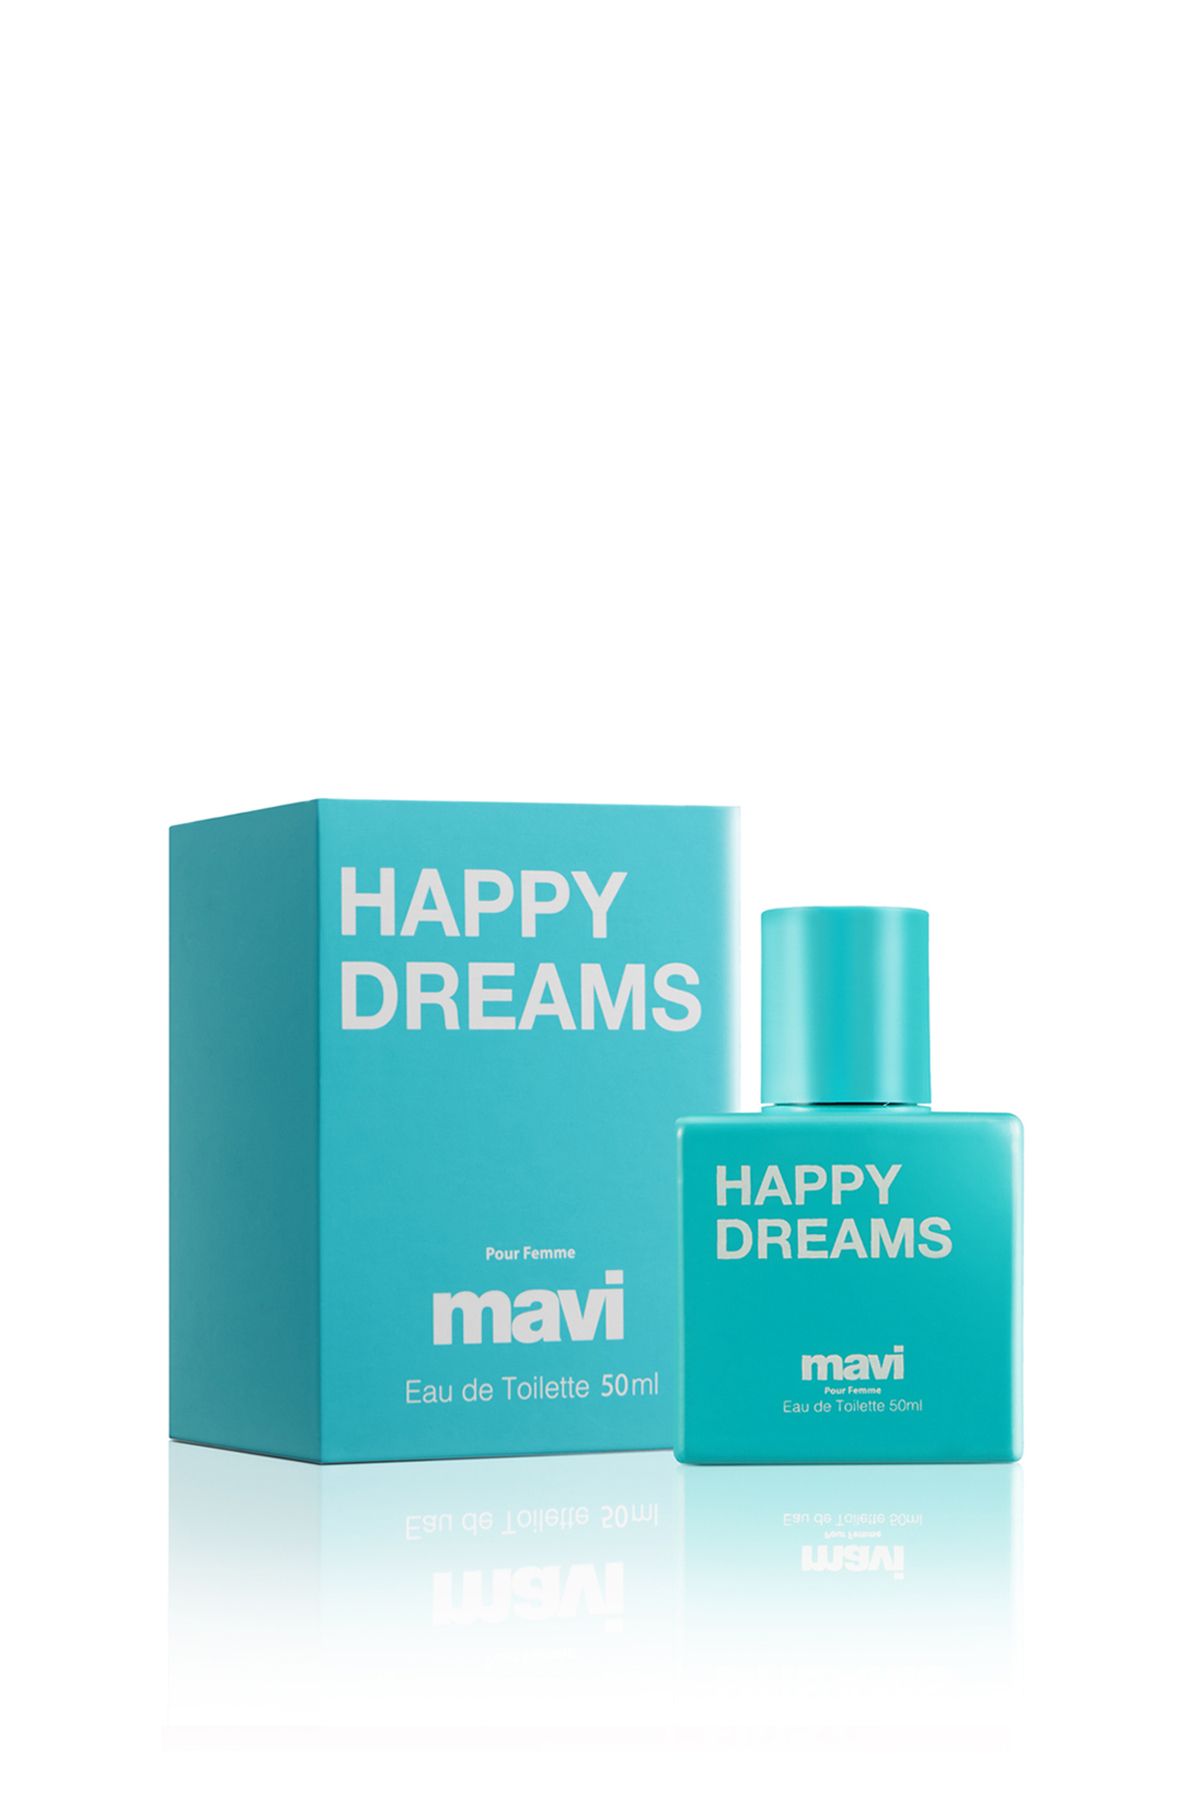 عطر زنانه آبی هپی دریمز برند ماوی 50 میل Mavi Happy Dreams